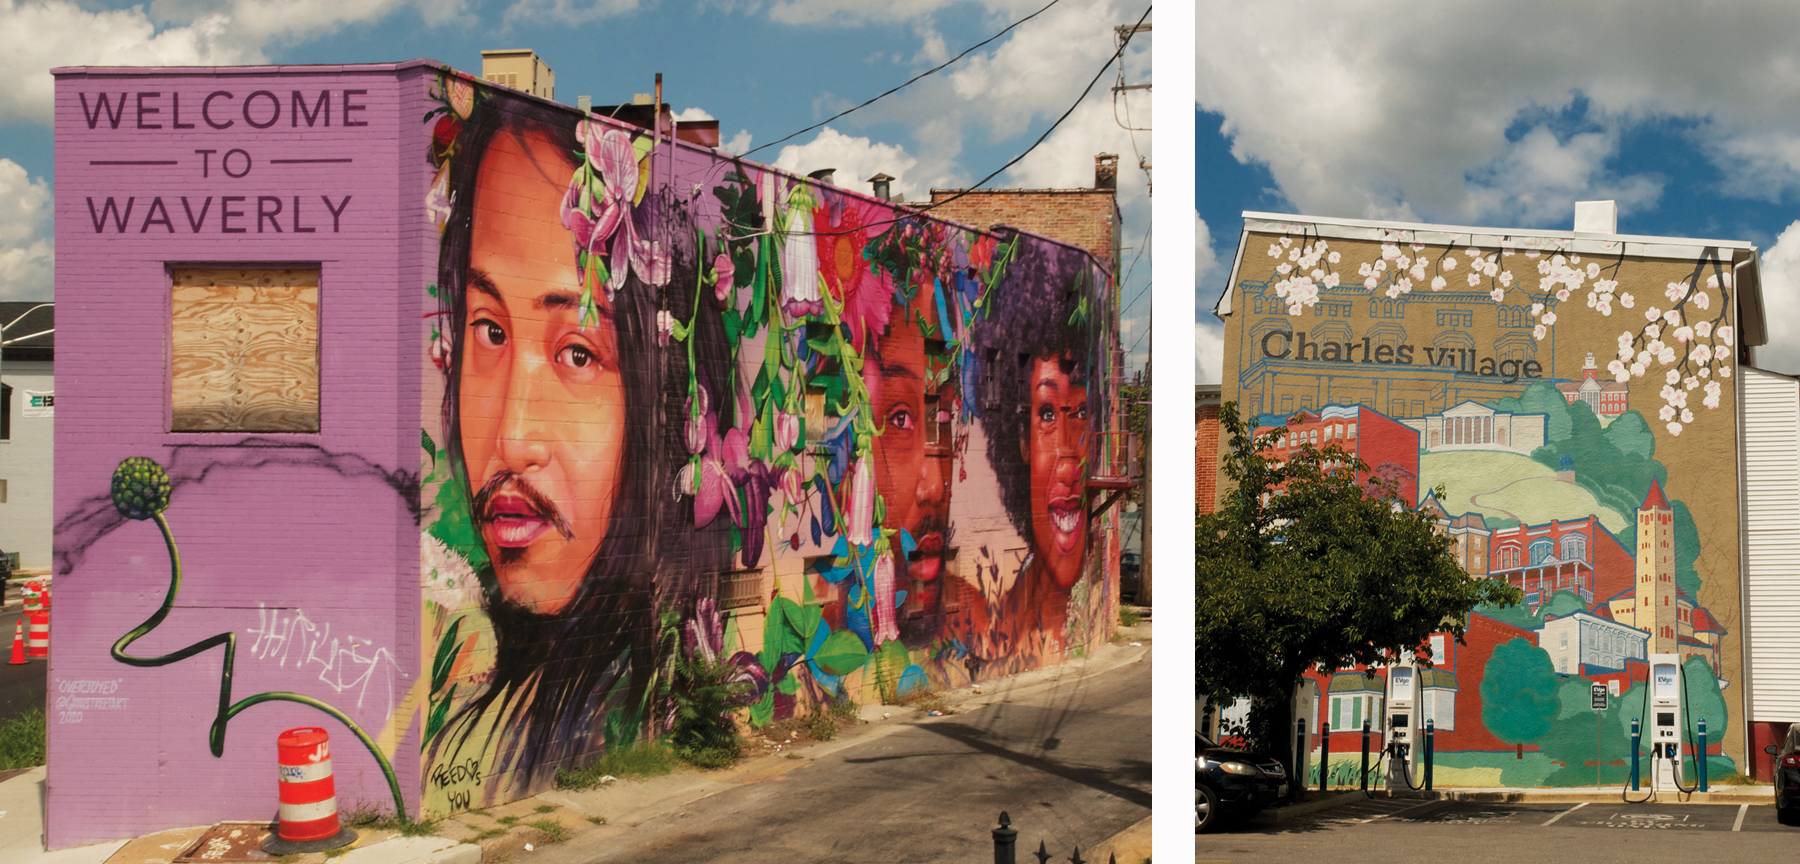 Artblog | Baltimore murals speak to communities and neighborhoods, a ...